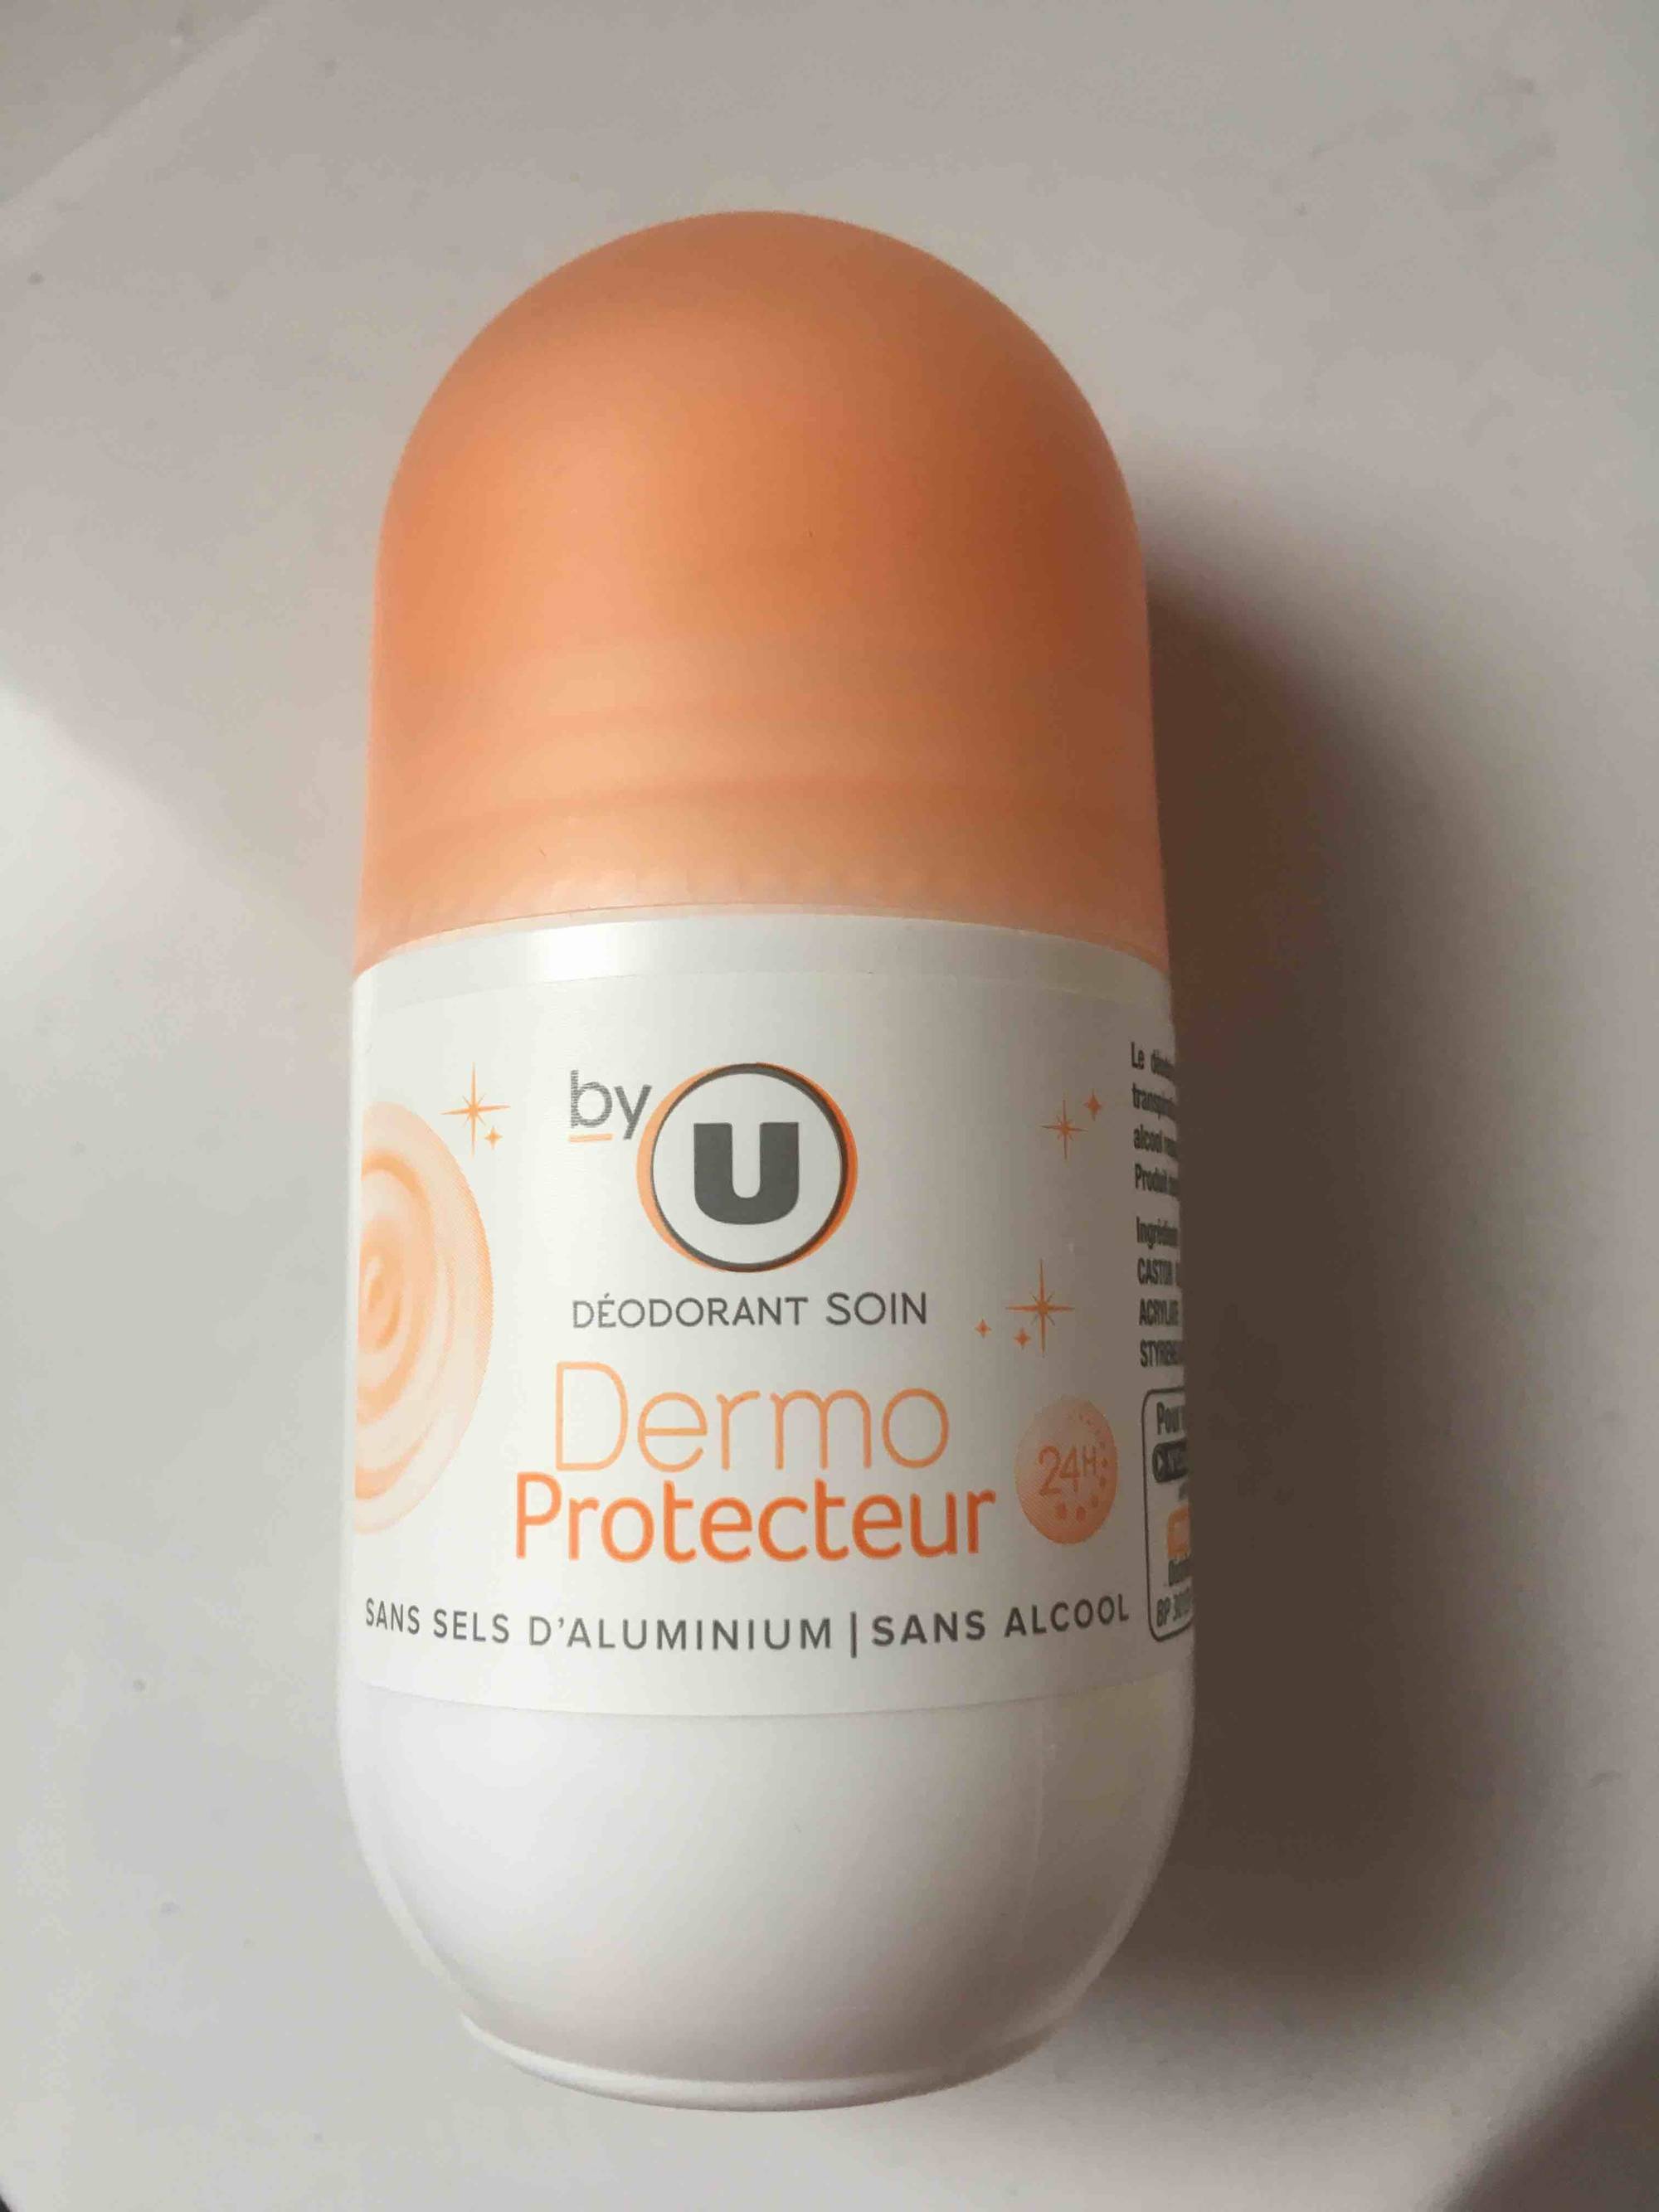 BY U - Dermo Protecteur - Déodorant soin 24h